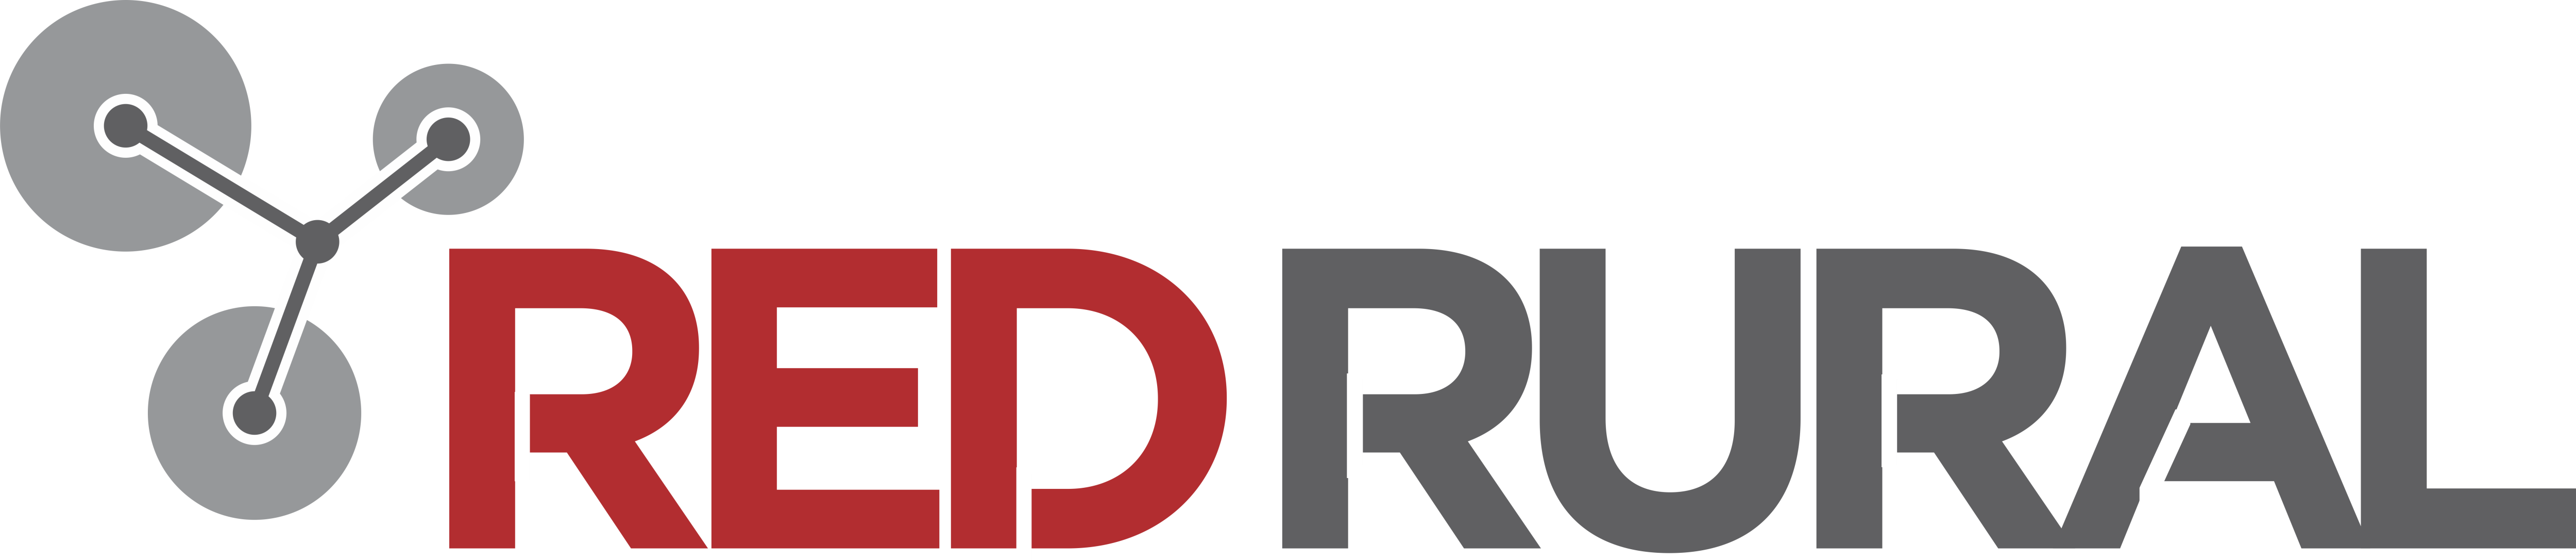 red-rural-logo-a